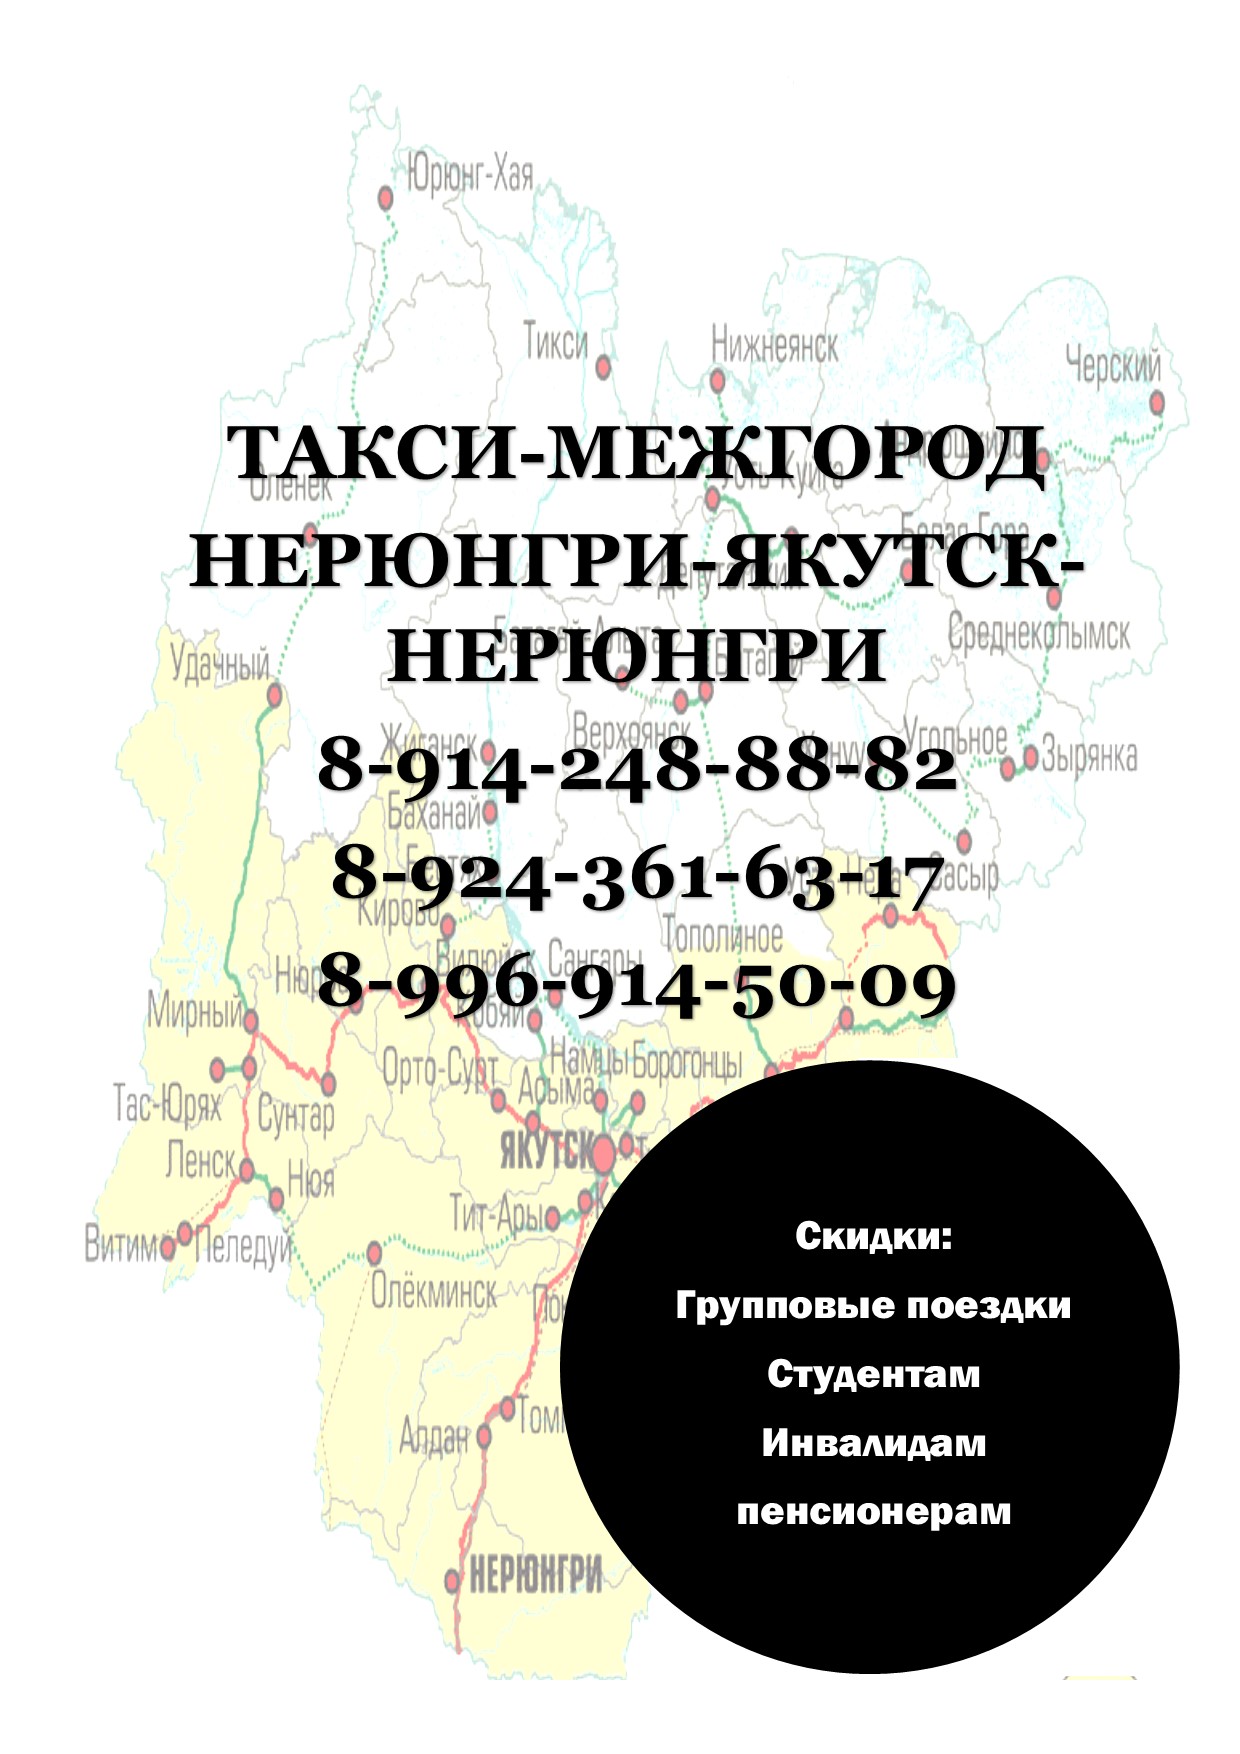 Предложение: Такси-Межгород Якутск-Нерюнгри-Якутск